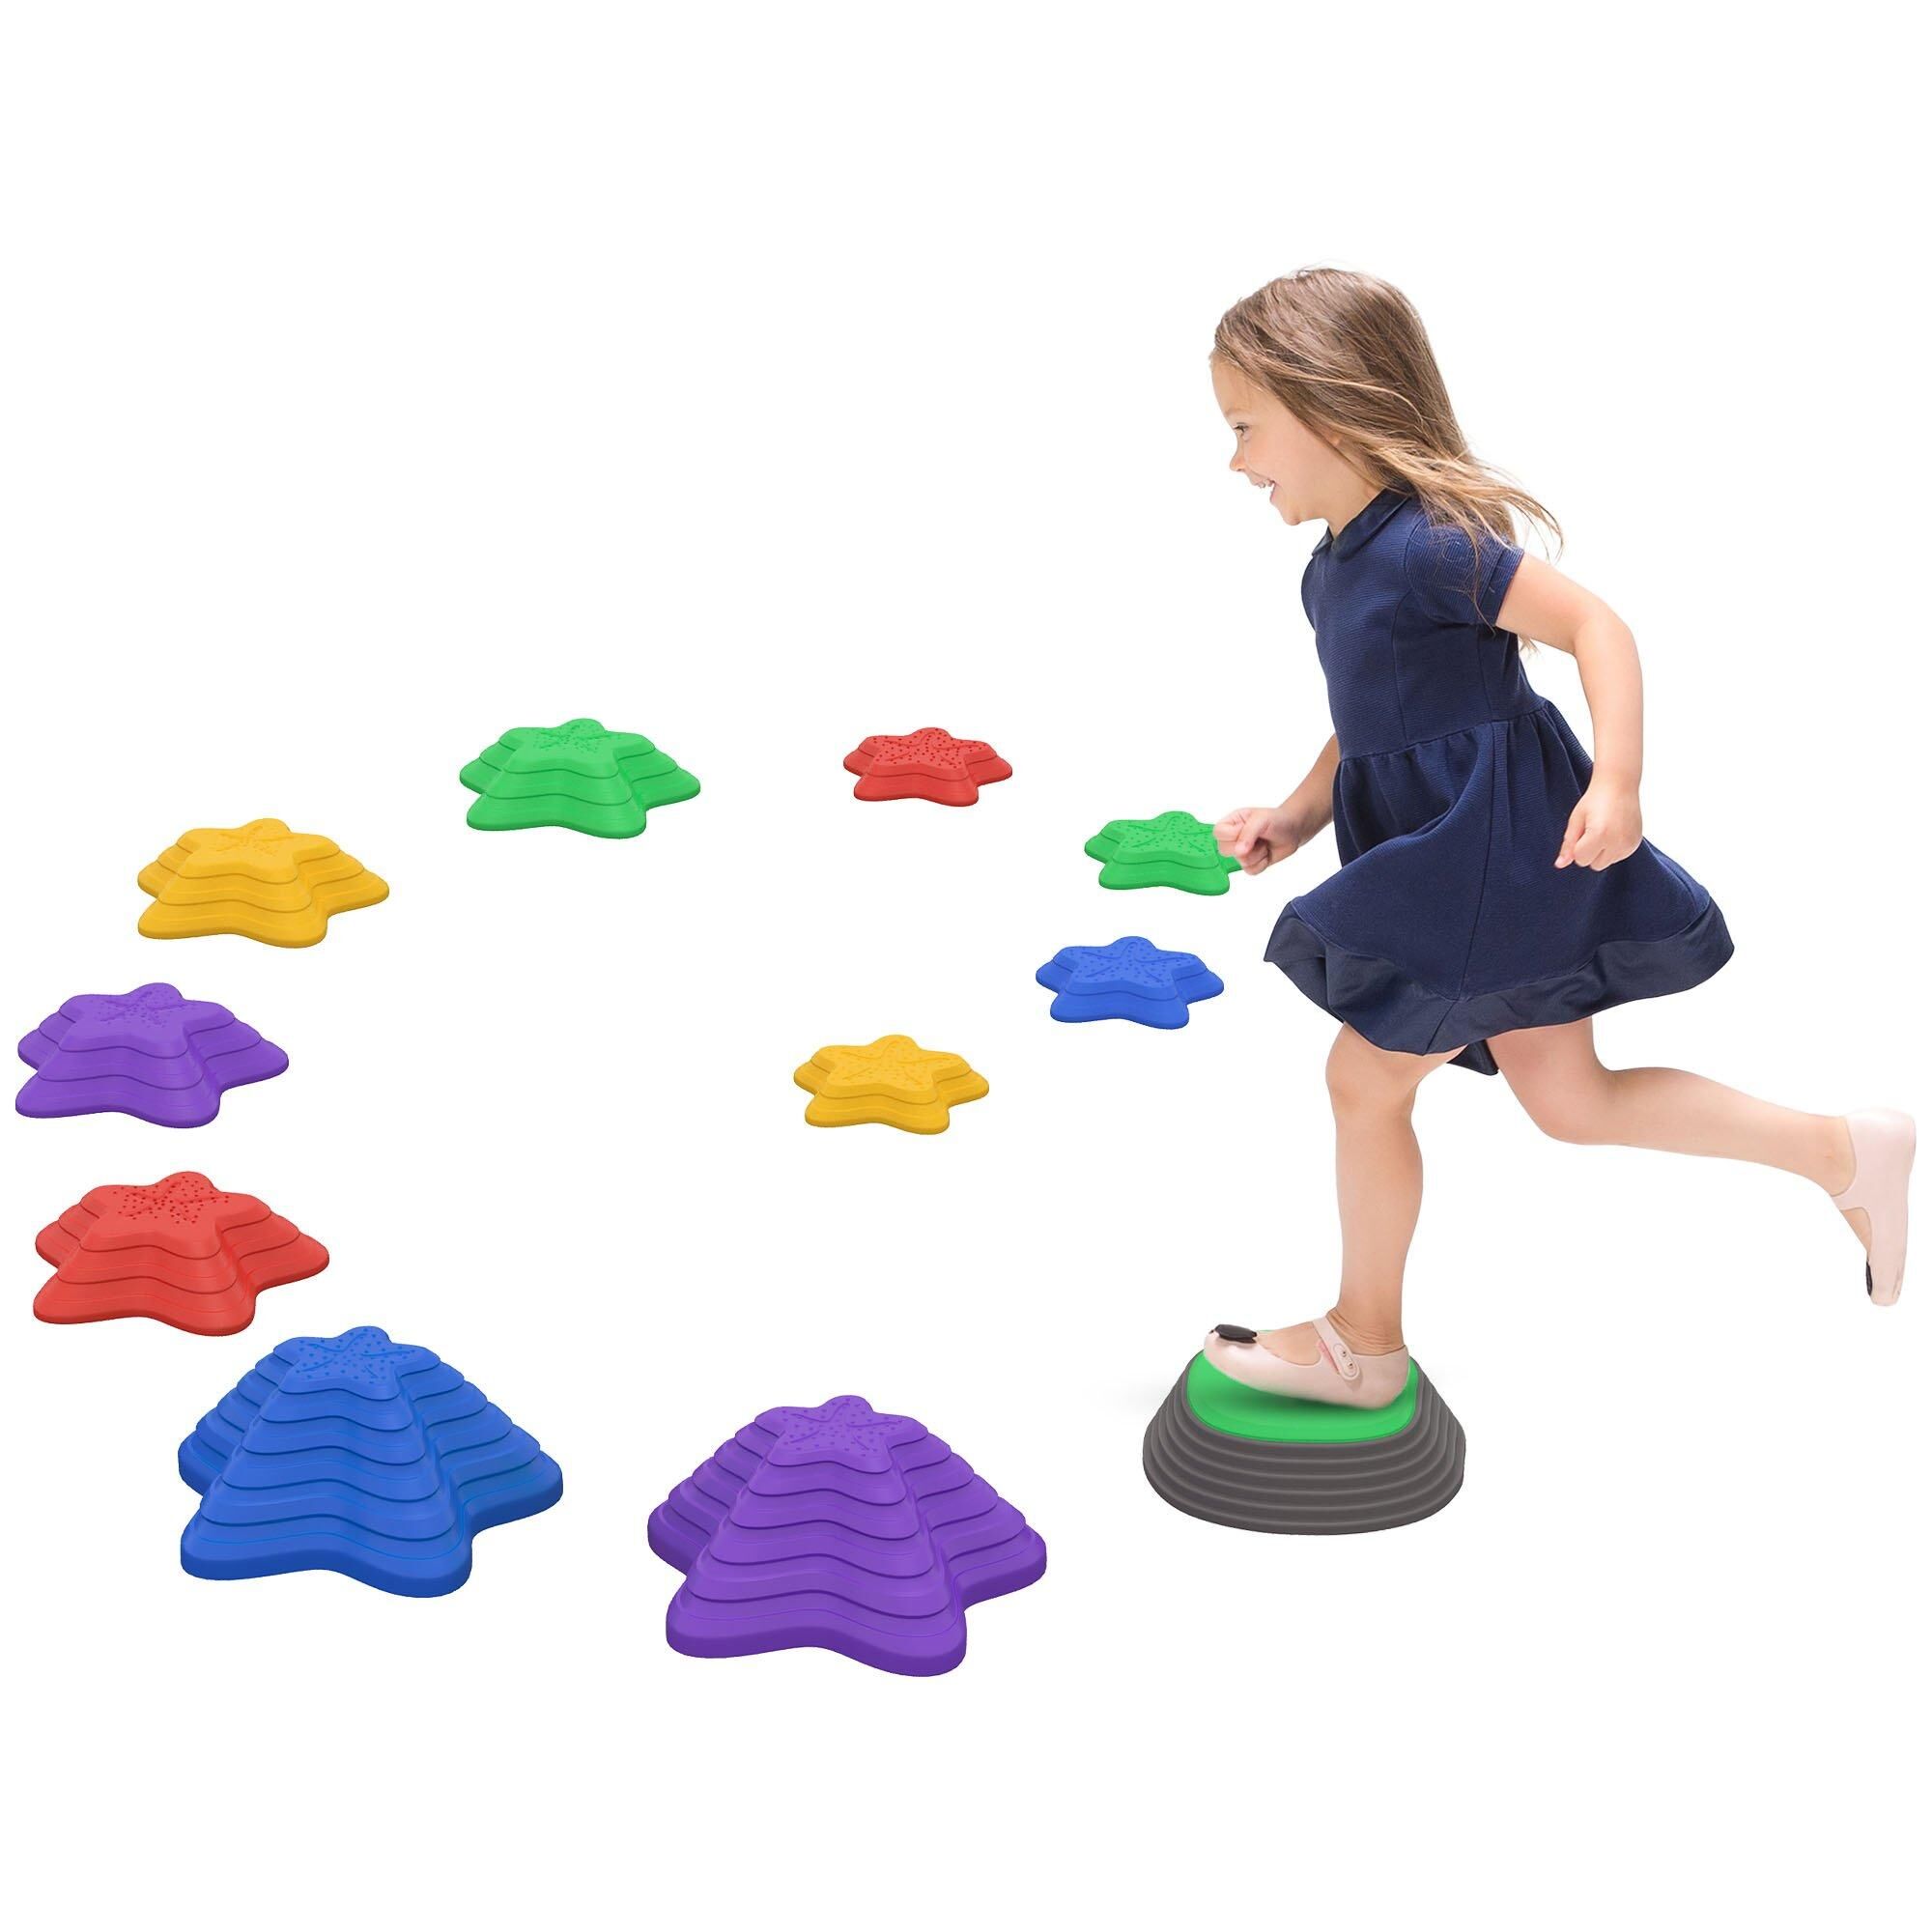 ZONEKIZ 11 PCs Stepping Stones Non-slip for Kids Balance Sensory Play Obstacle Course